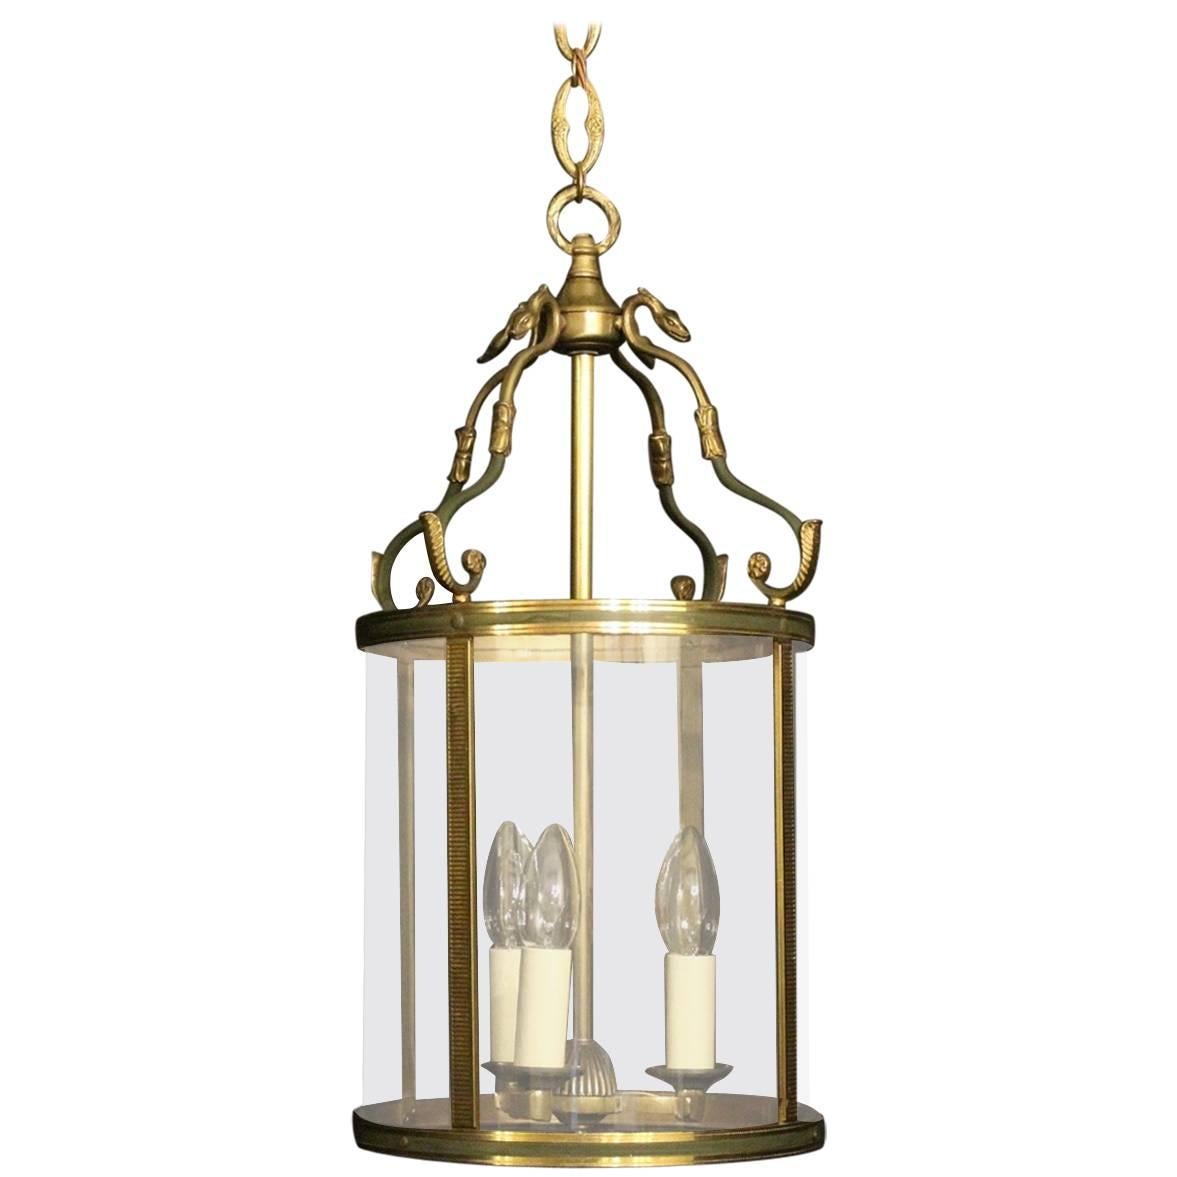 French Gilded Empire Convex Antique Hall Lantern